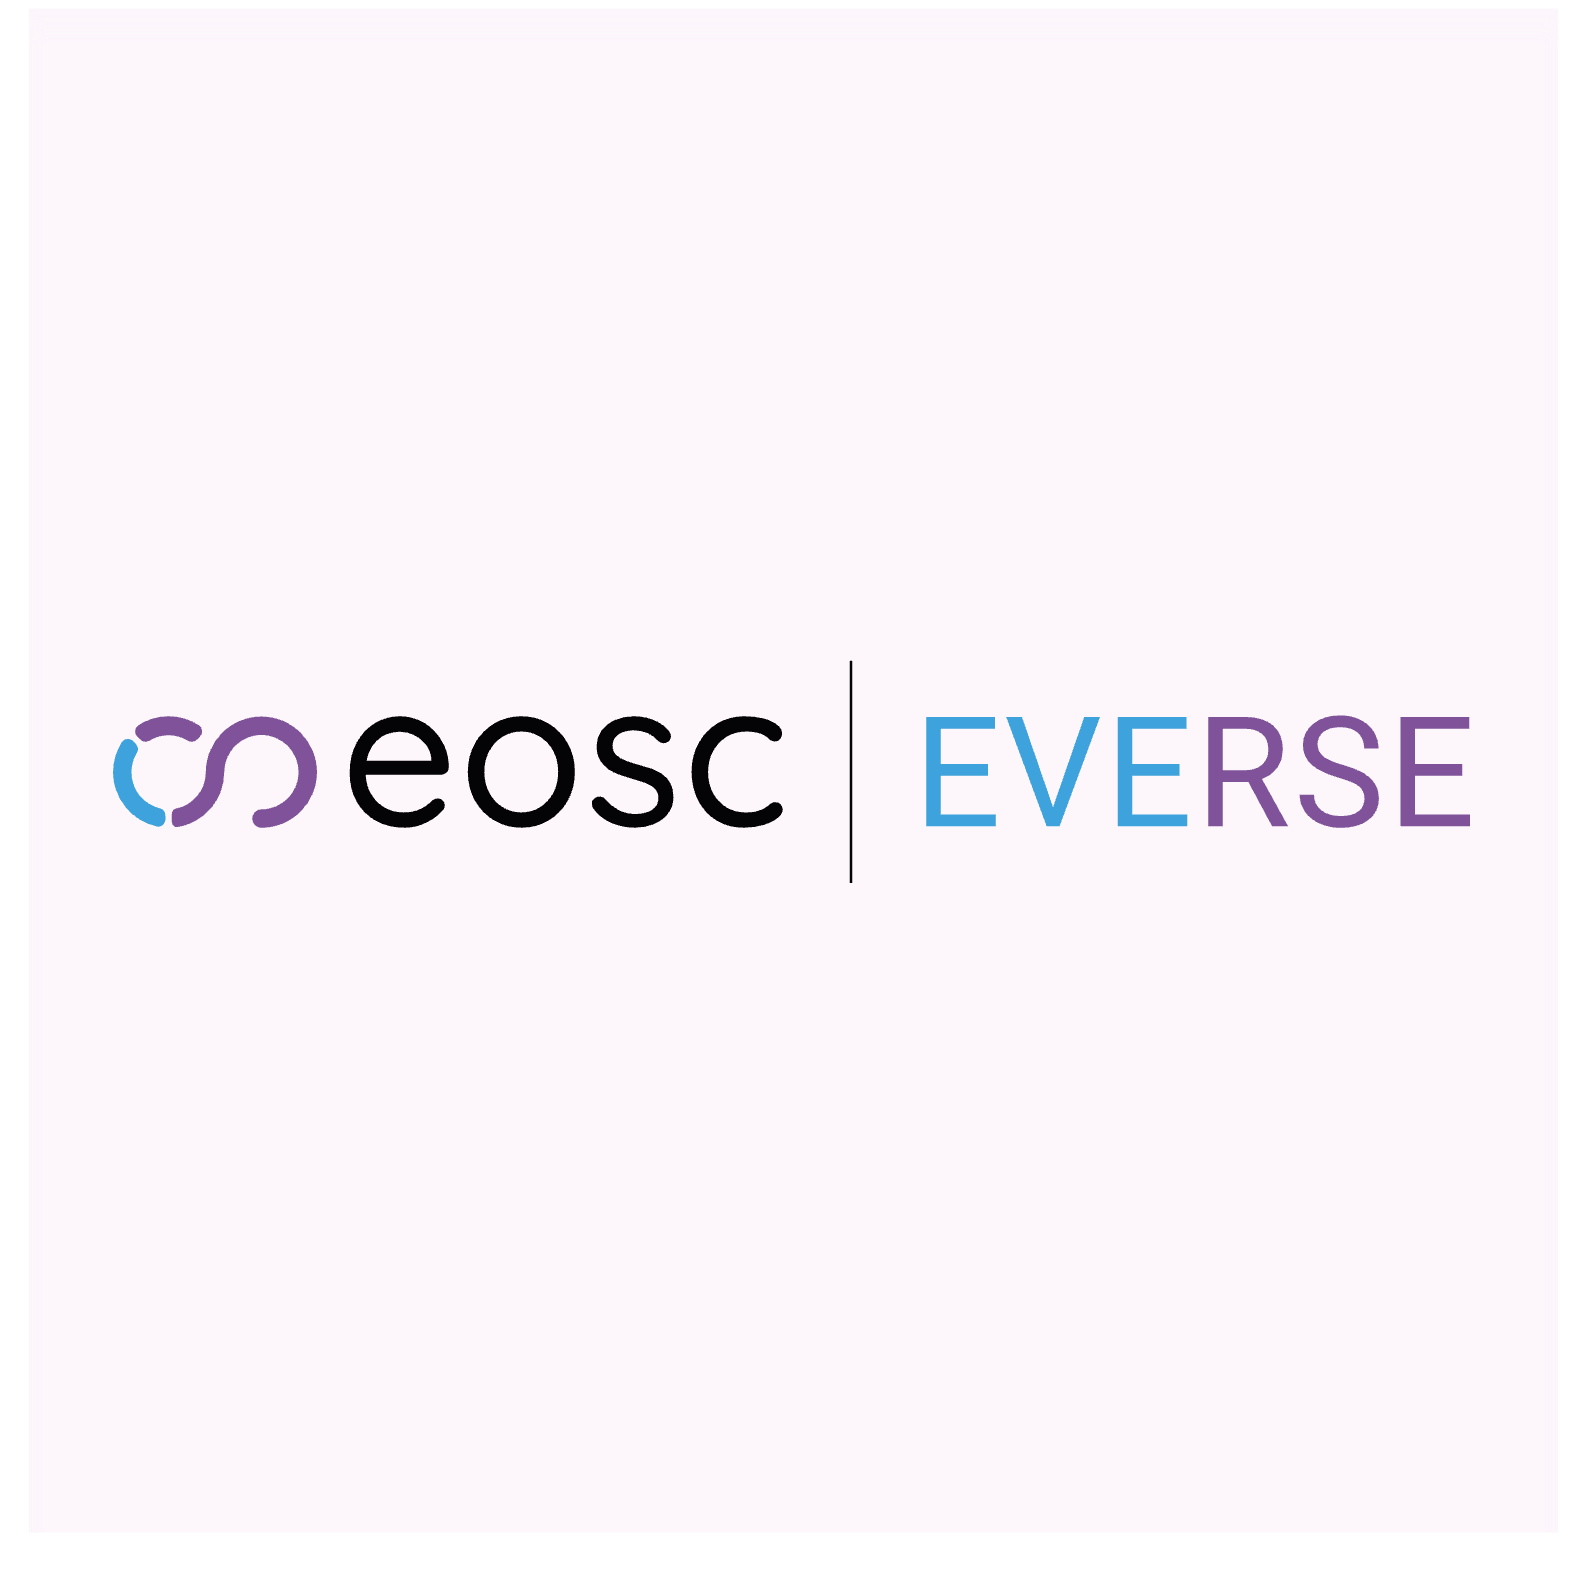 eosc everse